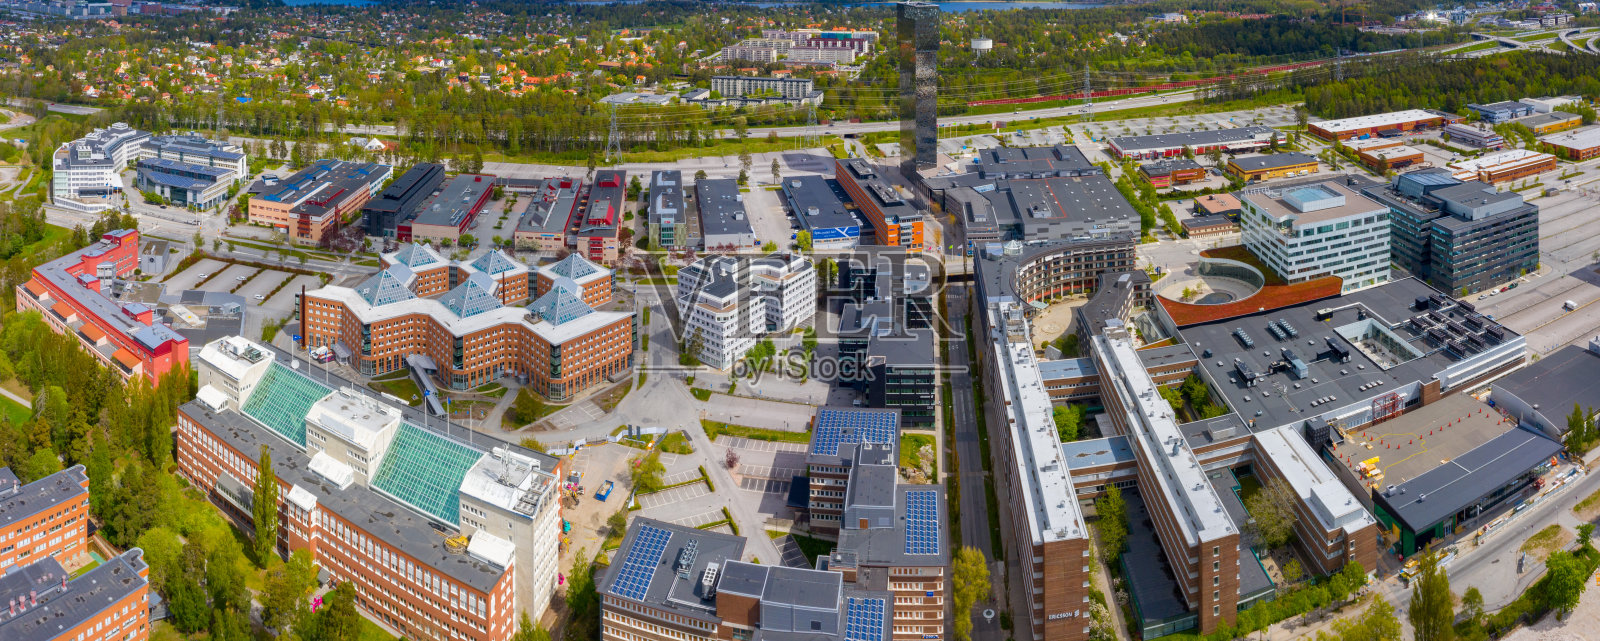 Kista从空中俯瞰，斯德哥尔摩照片摄影图片